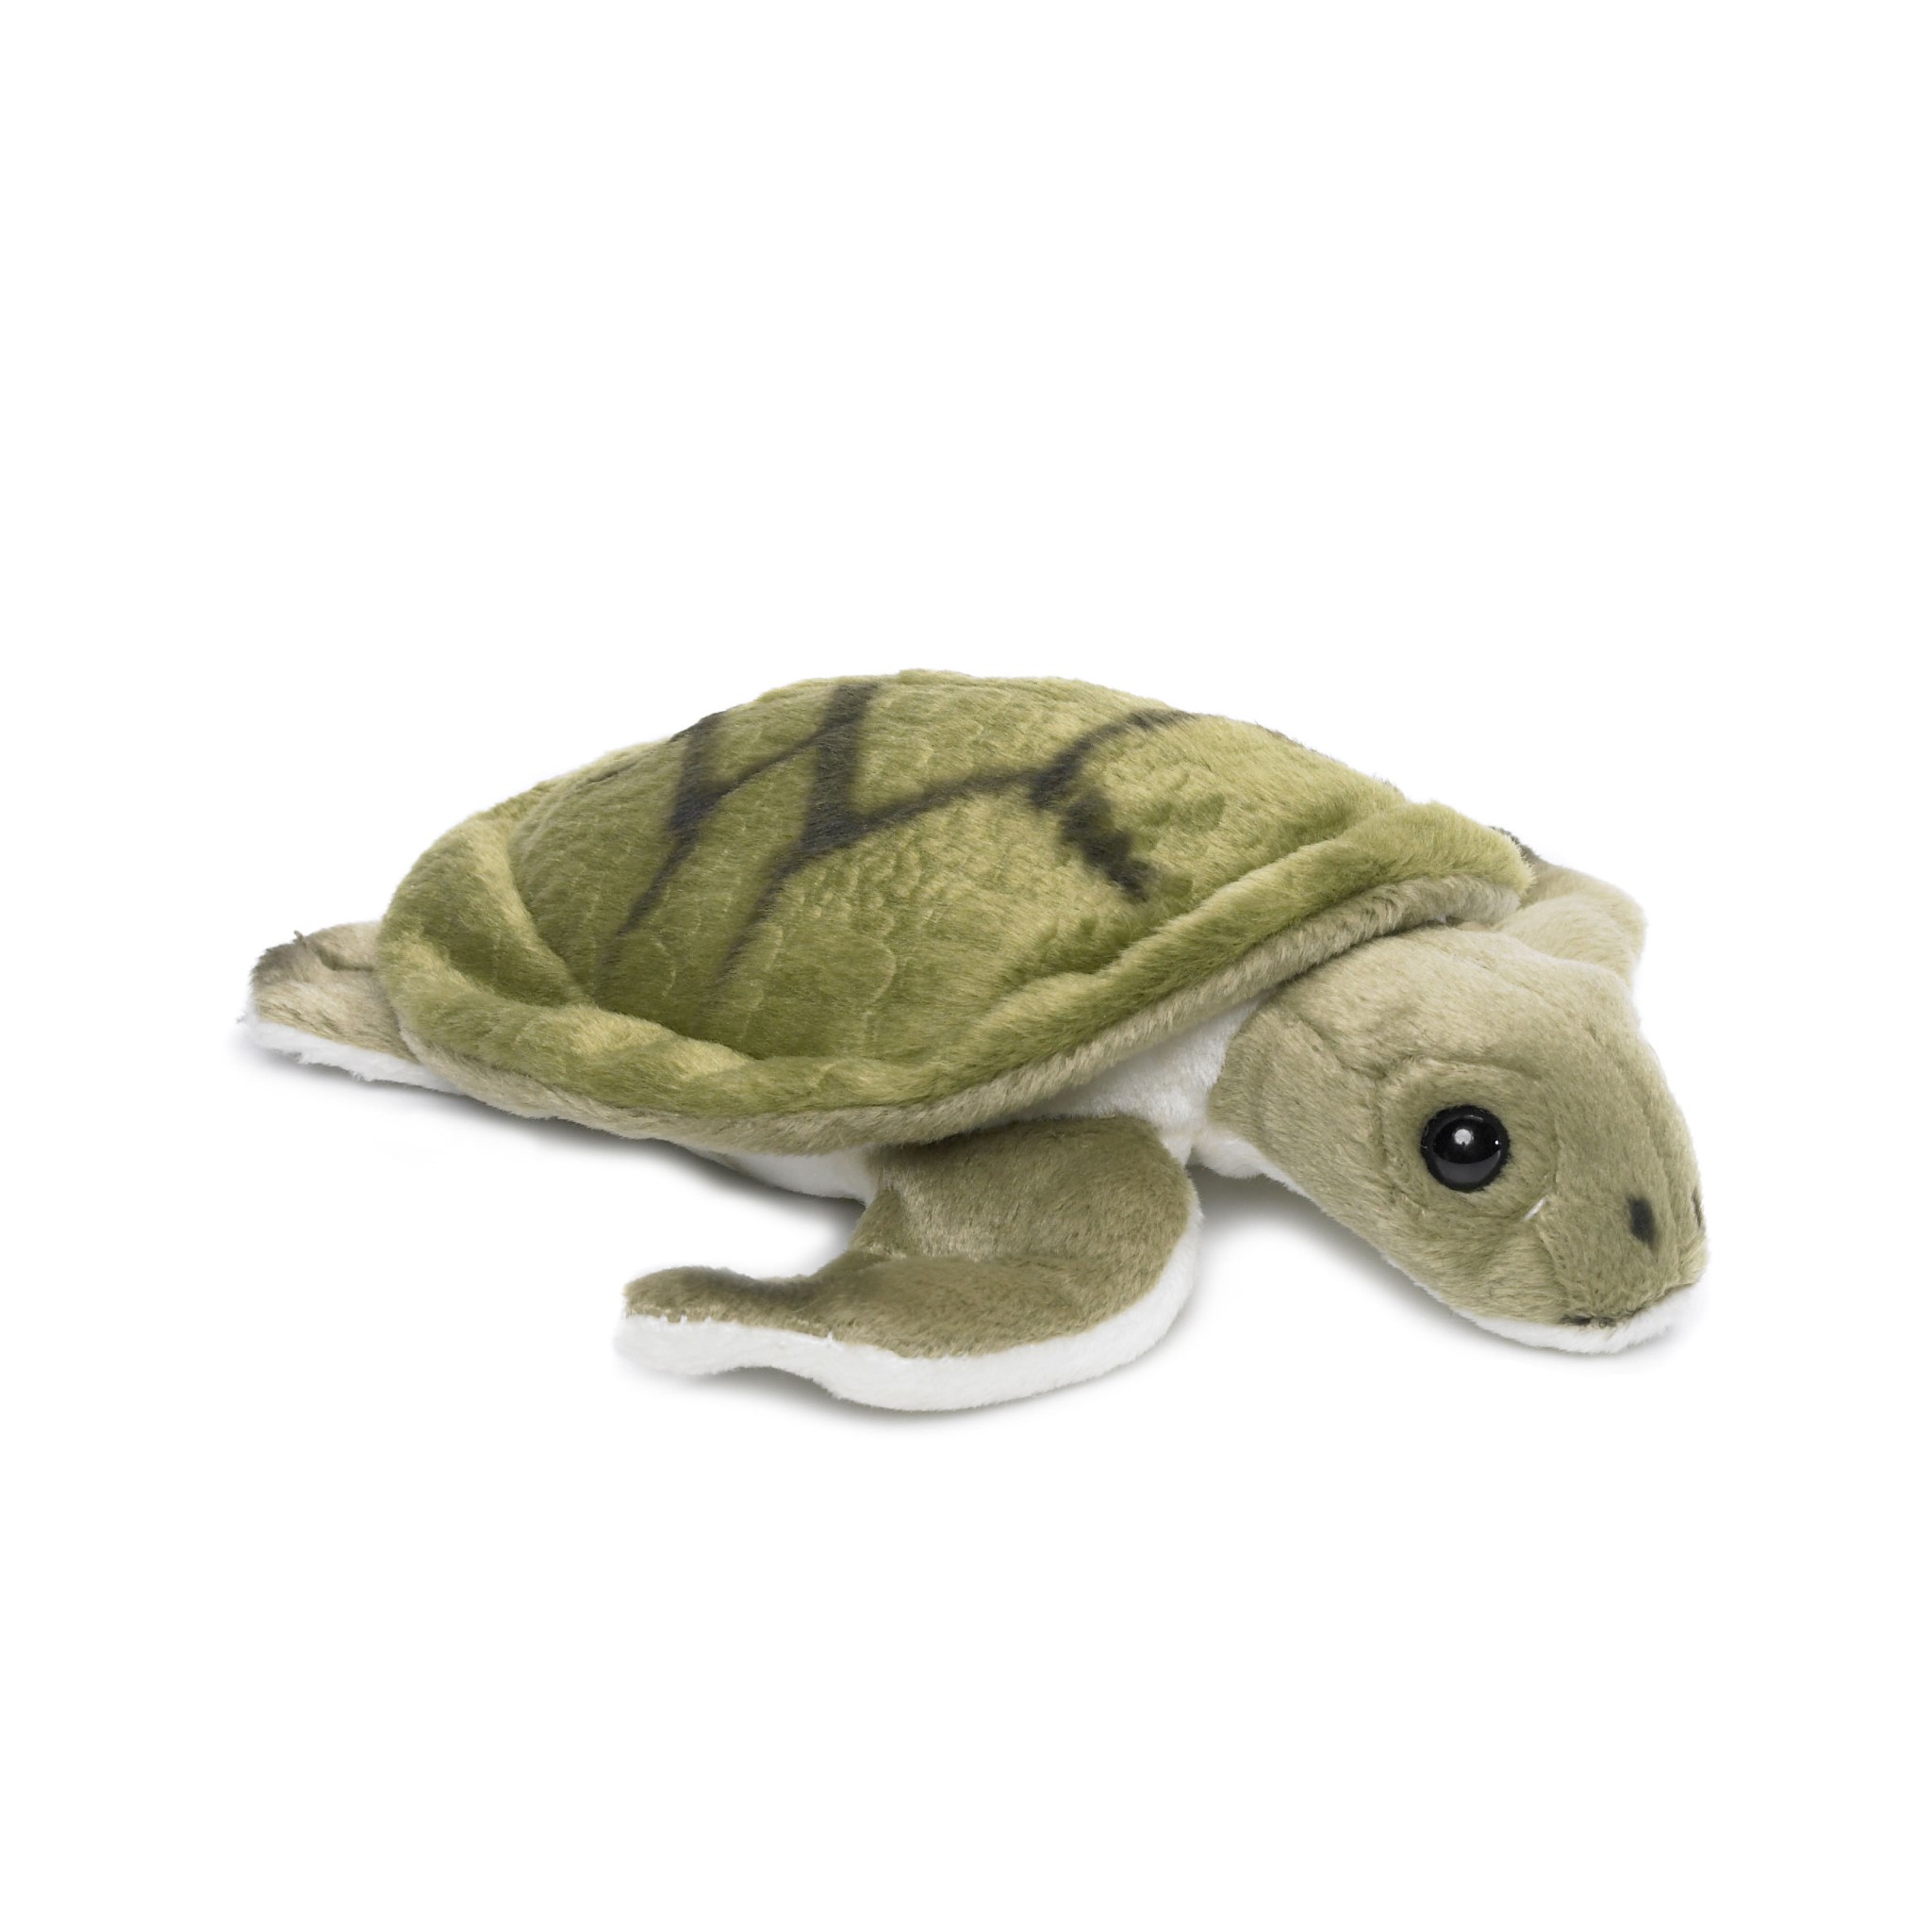 Ongunstig transactie Surrey Schildpad knuffel | WWF | Zacht prijsje, grote steun